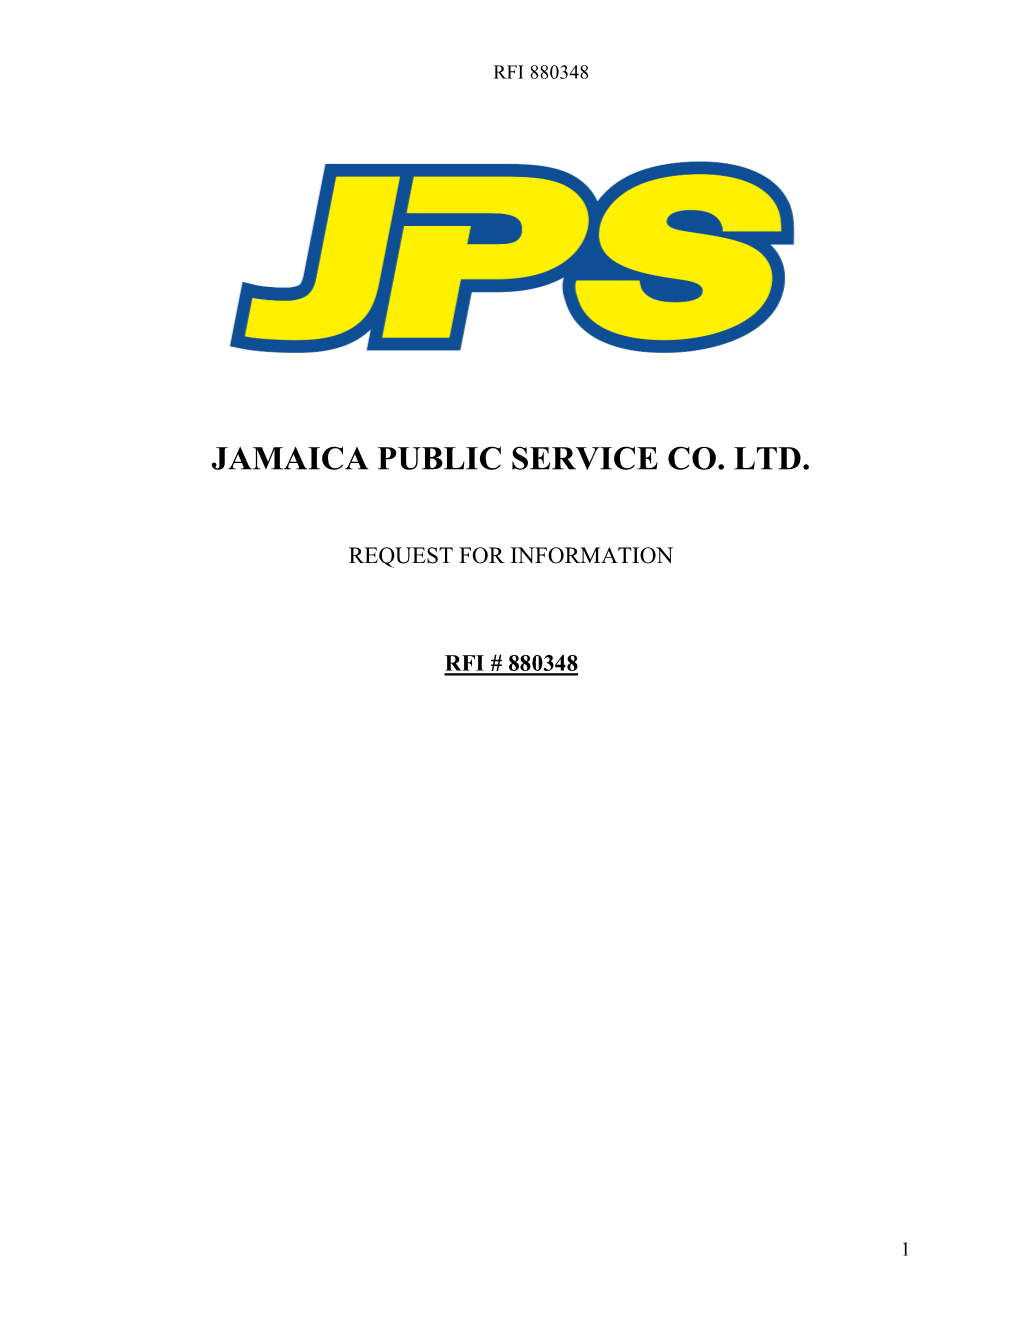 Jamaica Public Service Co. Ltd